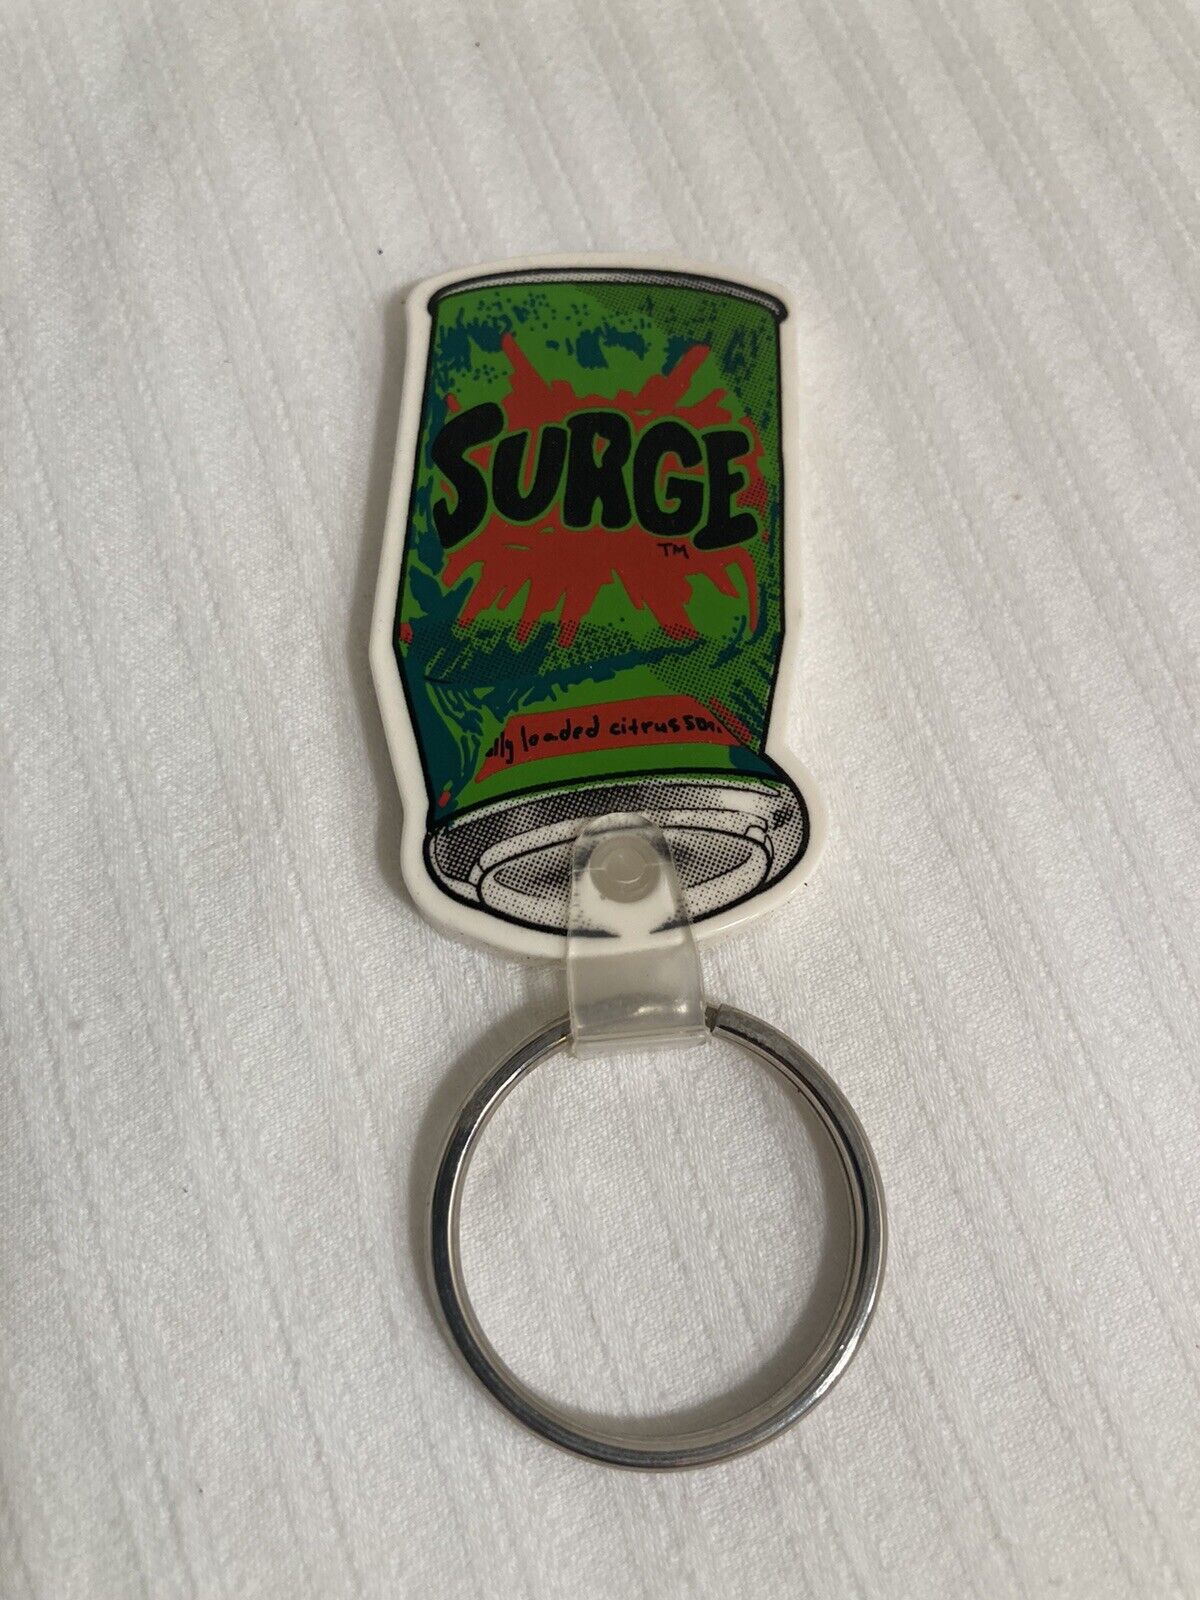 Vintage Surge Soda Key Chain - COCA COLA CO. Promotional Item